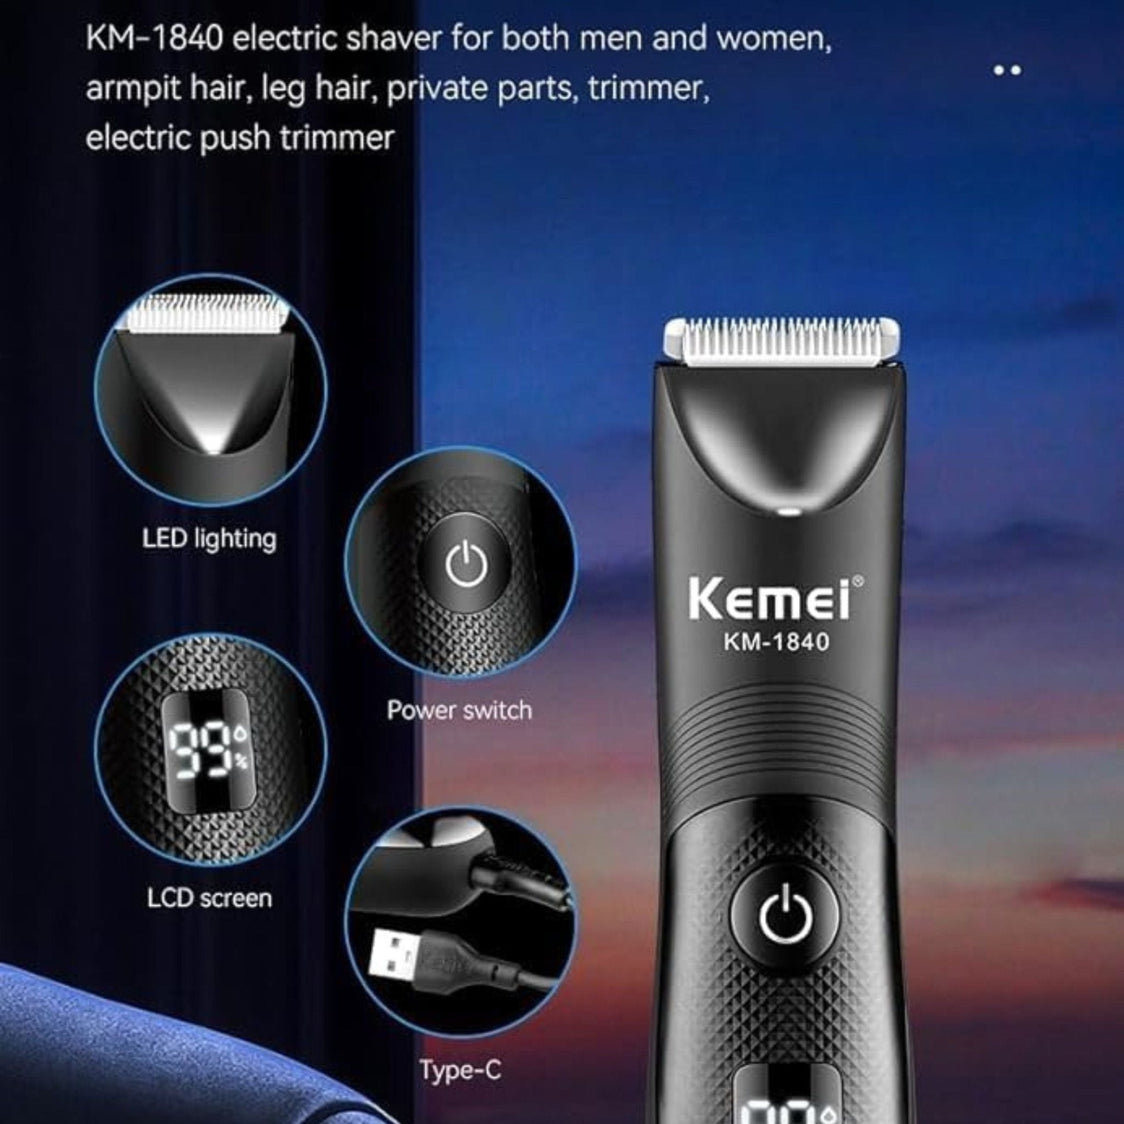 Kemei Professional Lady Secret Trimmer IPX7 LCD Display KM-1840 - Black